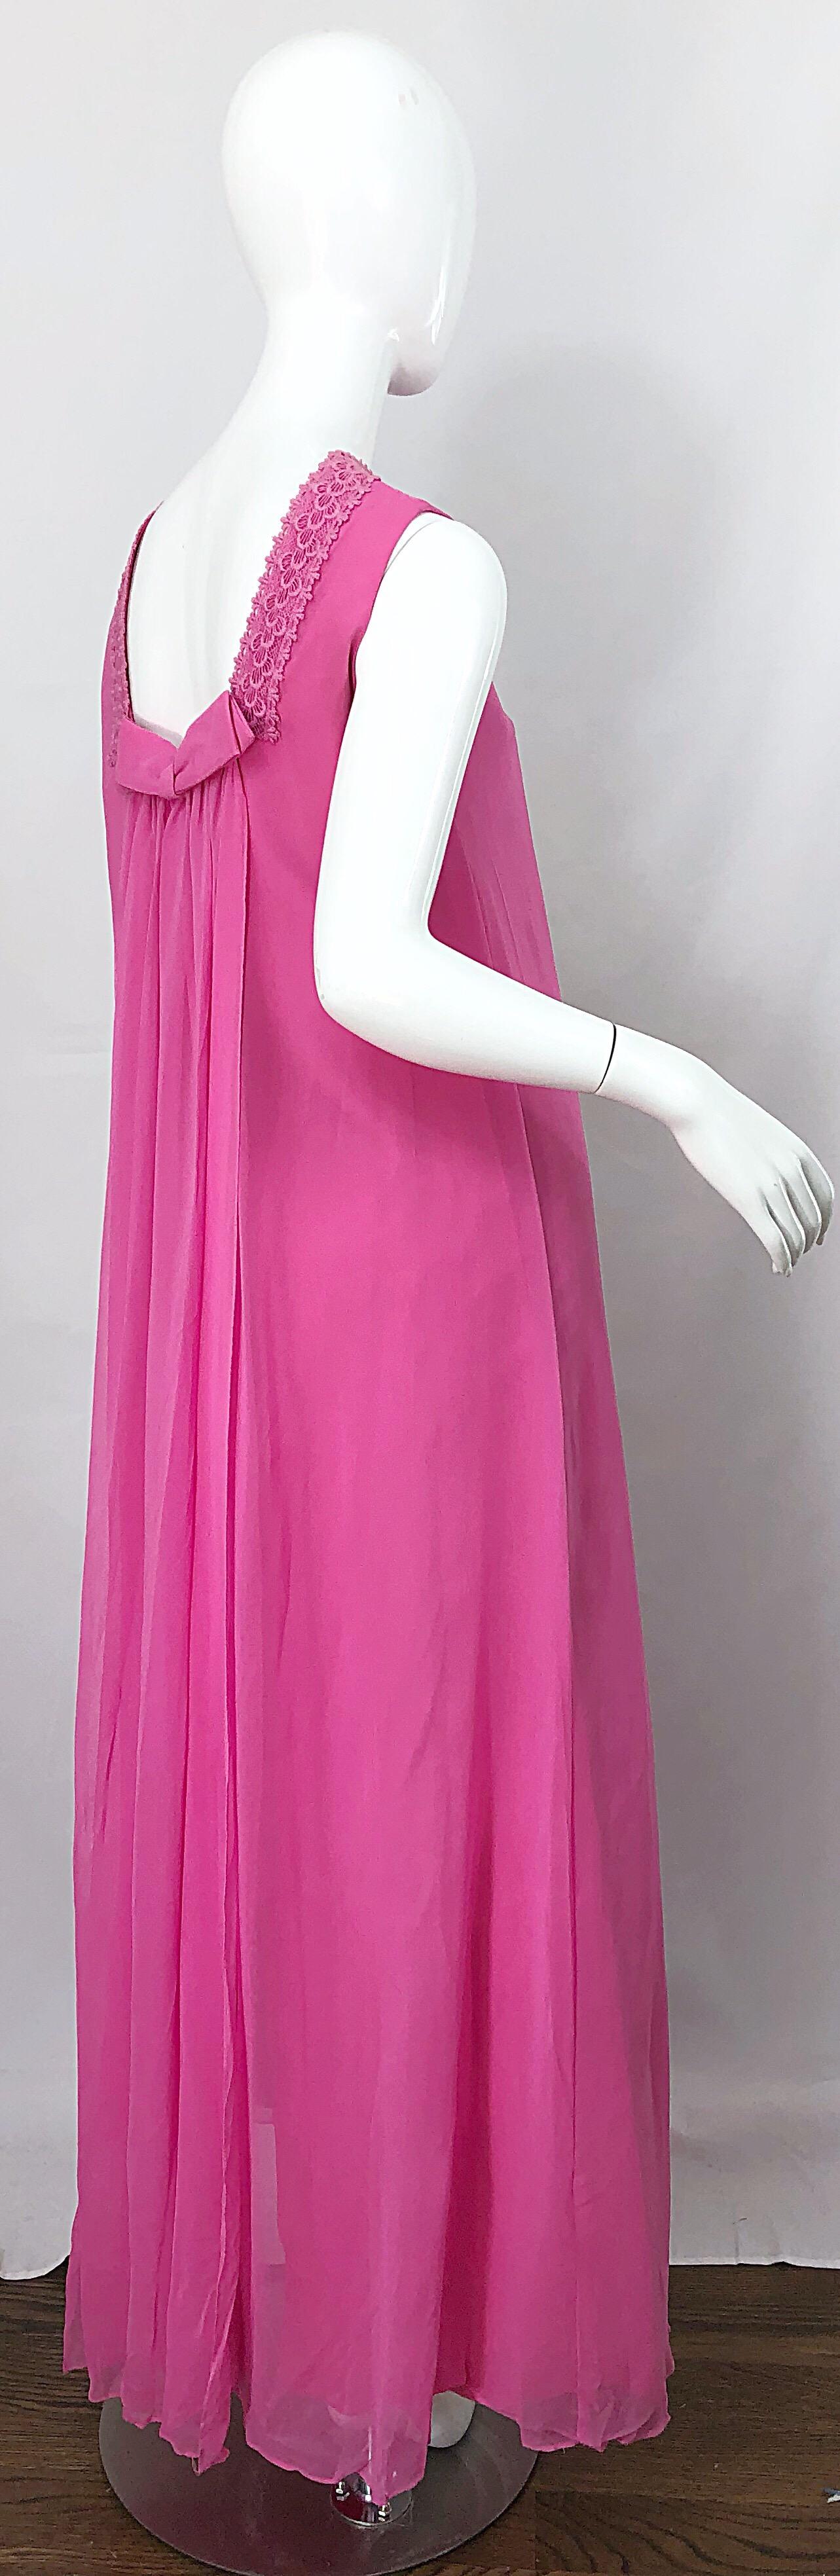 1960s Bubblegum Pink Silk Chiffon High Neck Demi Couture Vintage 60s Gown Dress For Sale 4